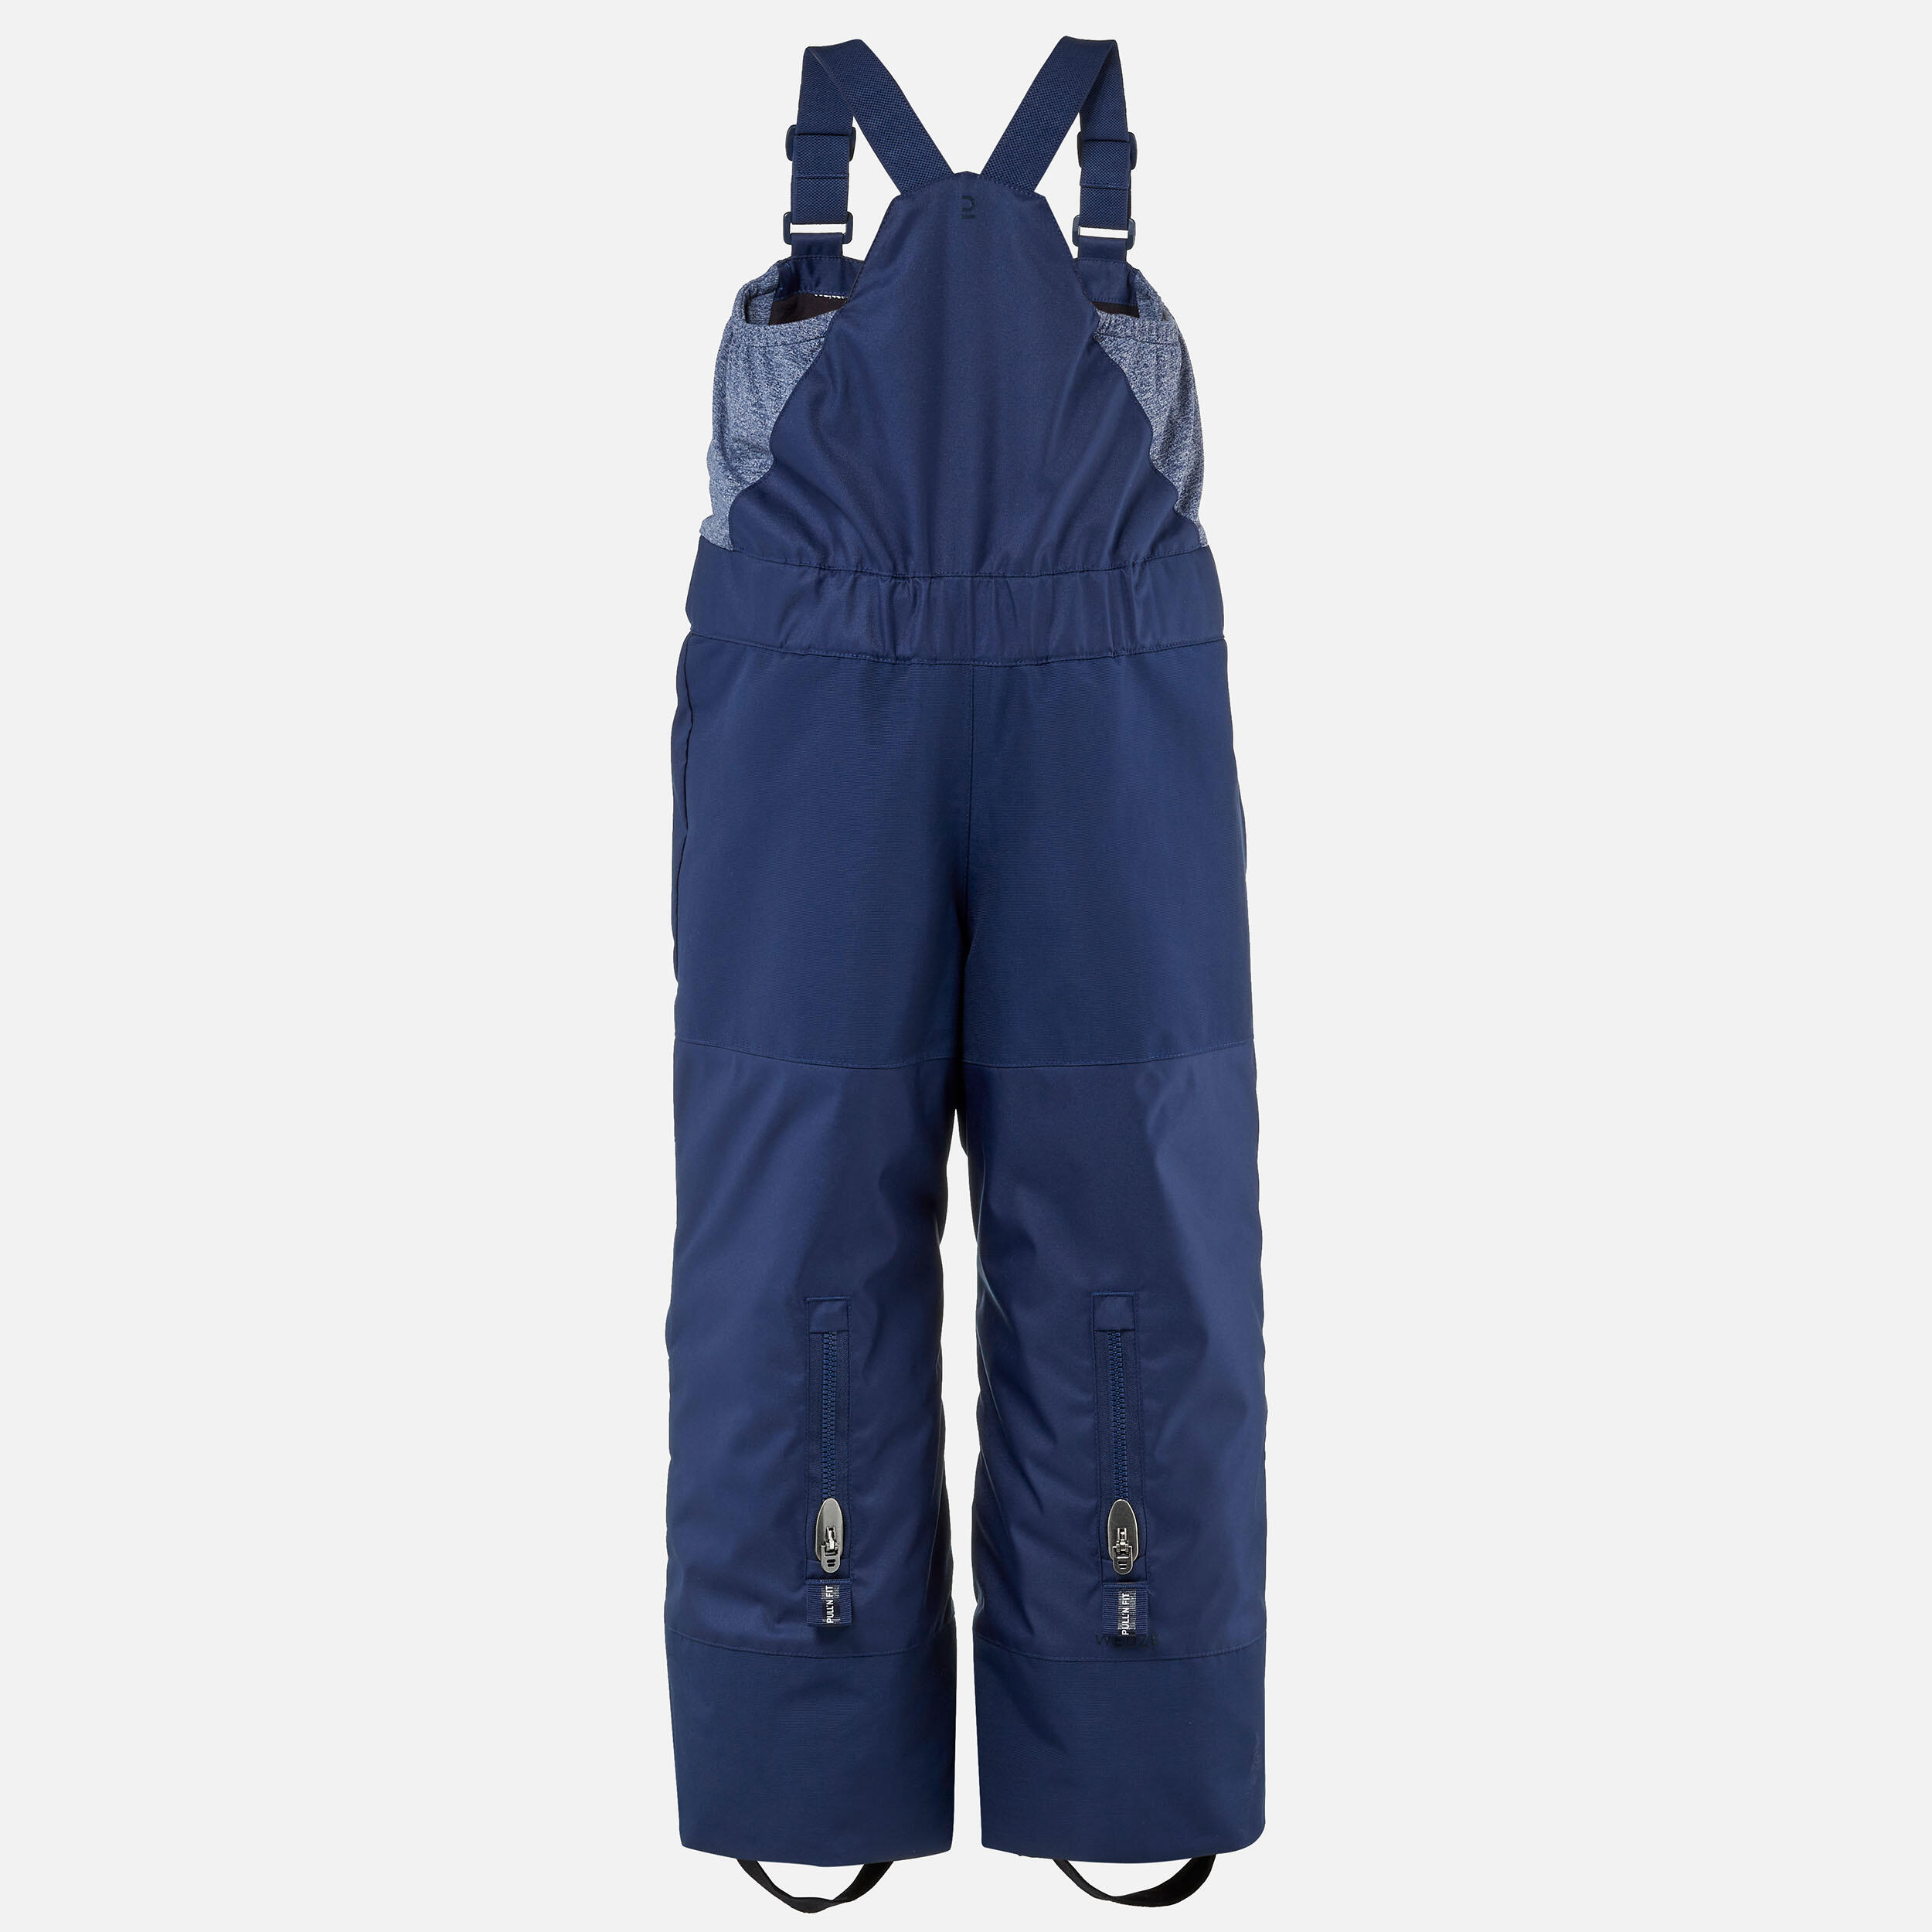 Wed'ze by Decathlon Boys Grey First Heat Waterproof Ski/Snow Pants